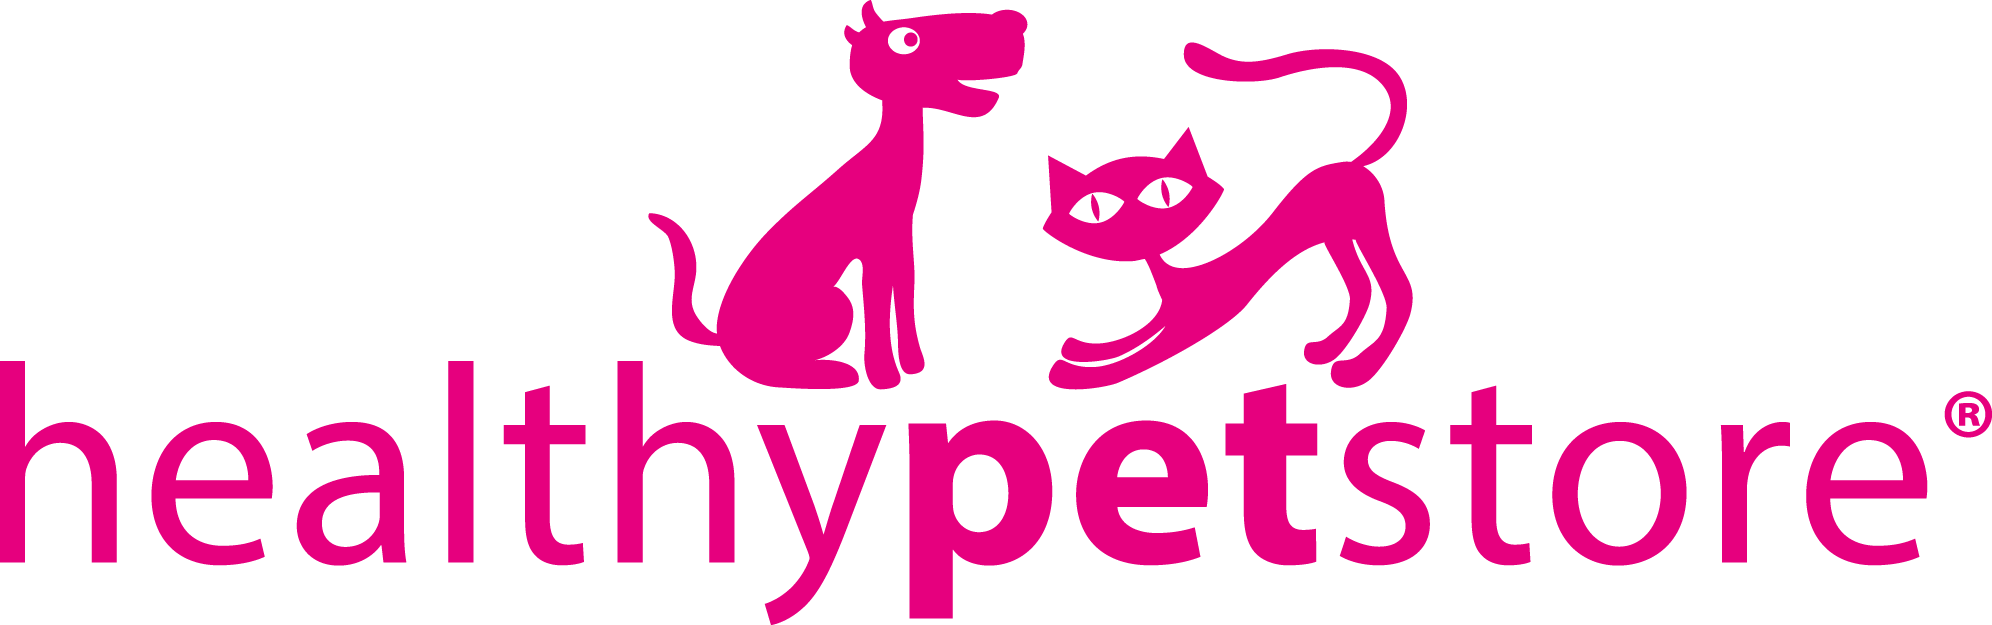 logo for Healthy Pet Store Ltd